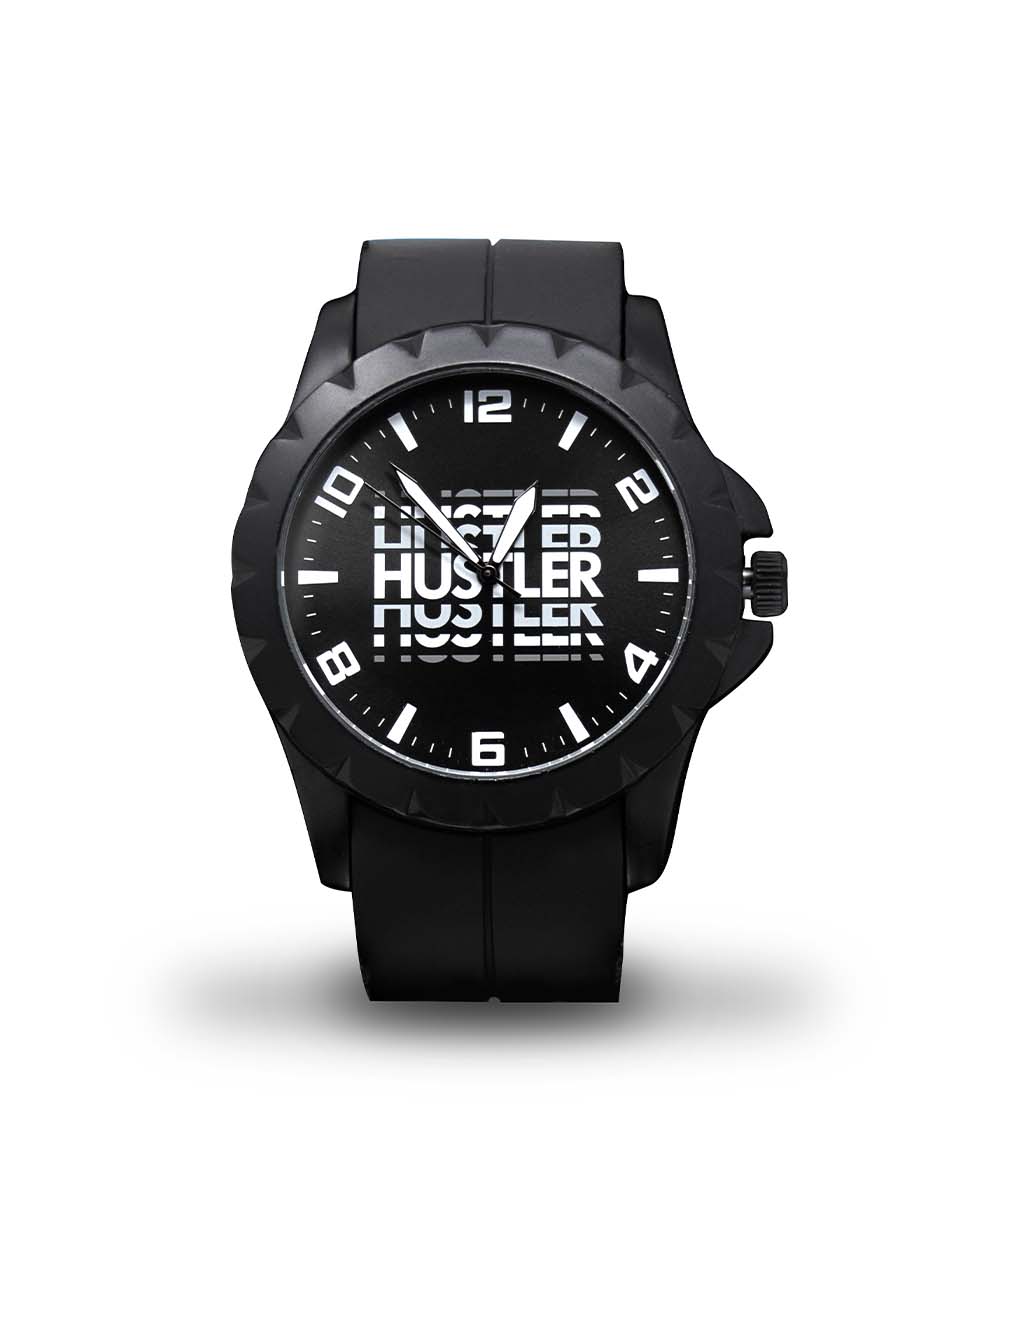 HUSTLER® Moto Collection Watch